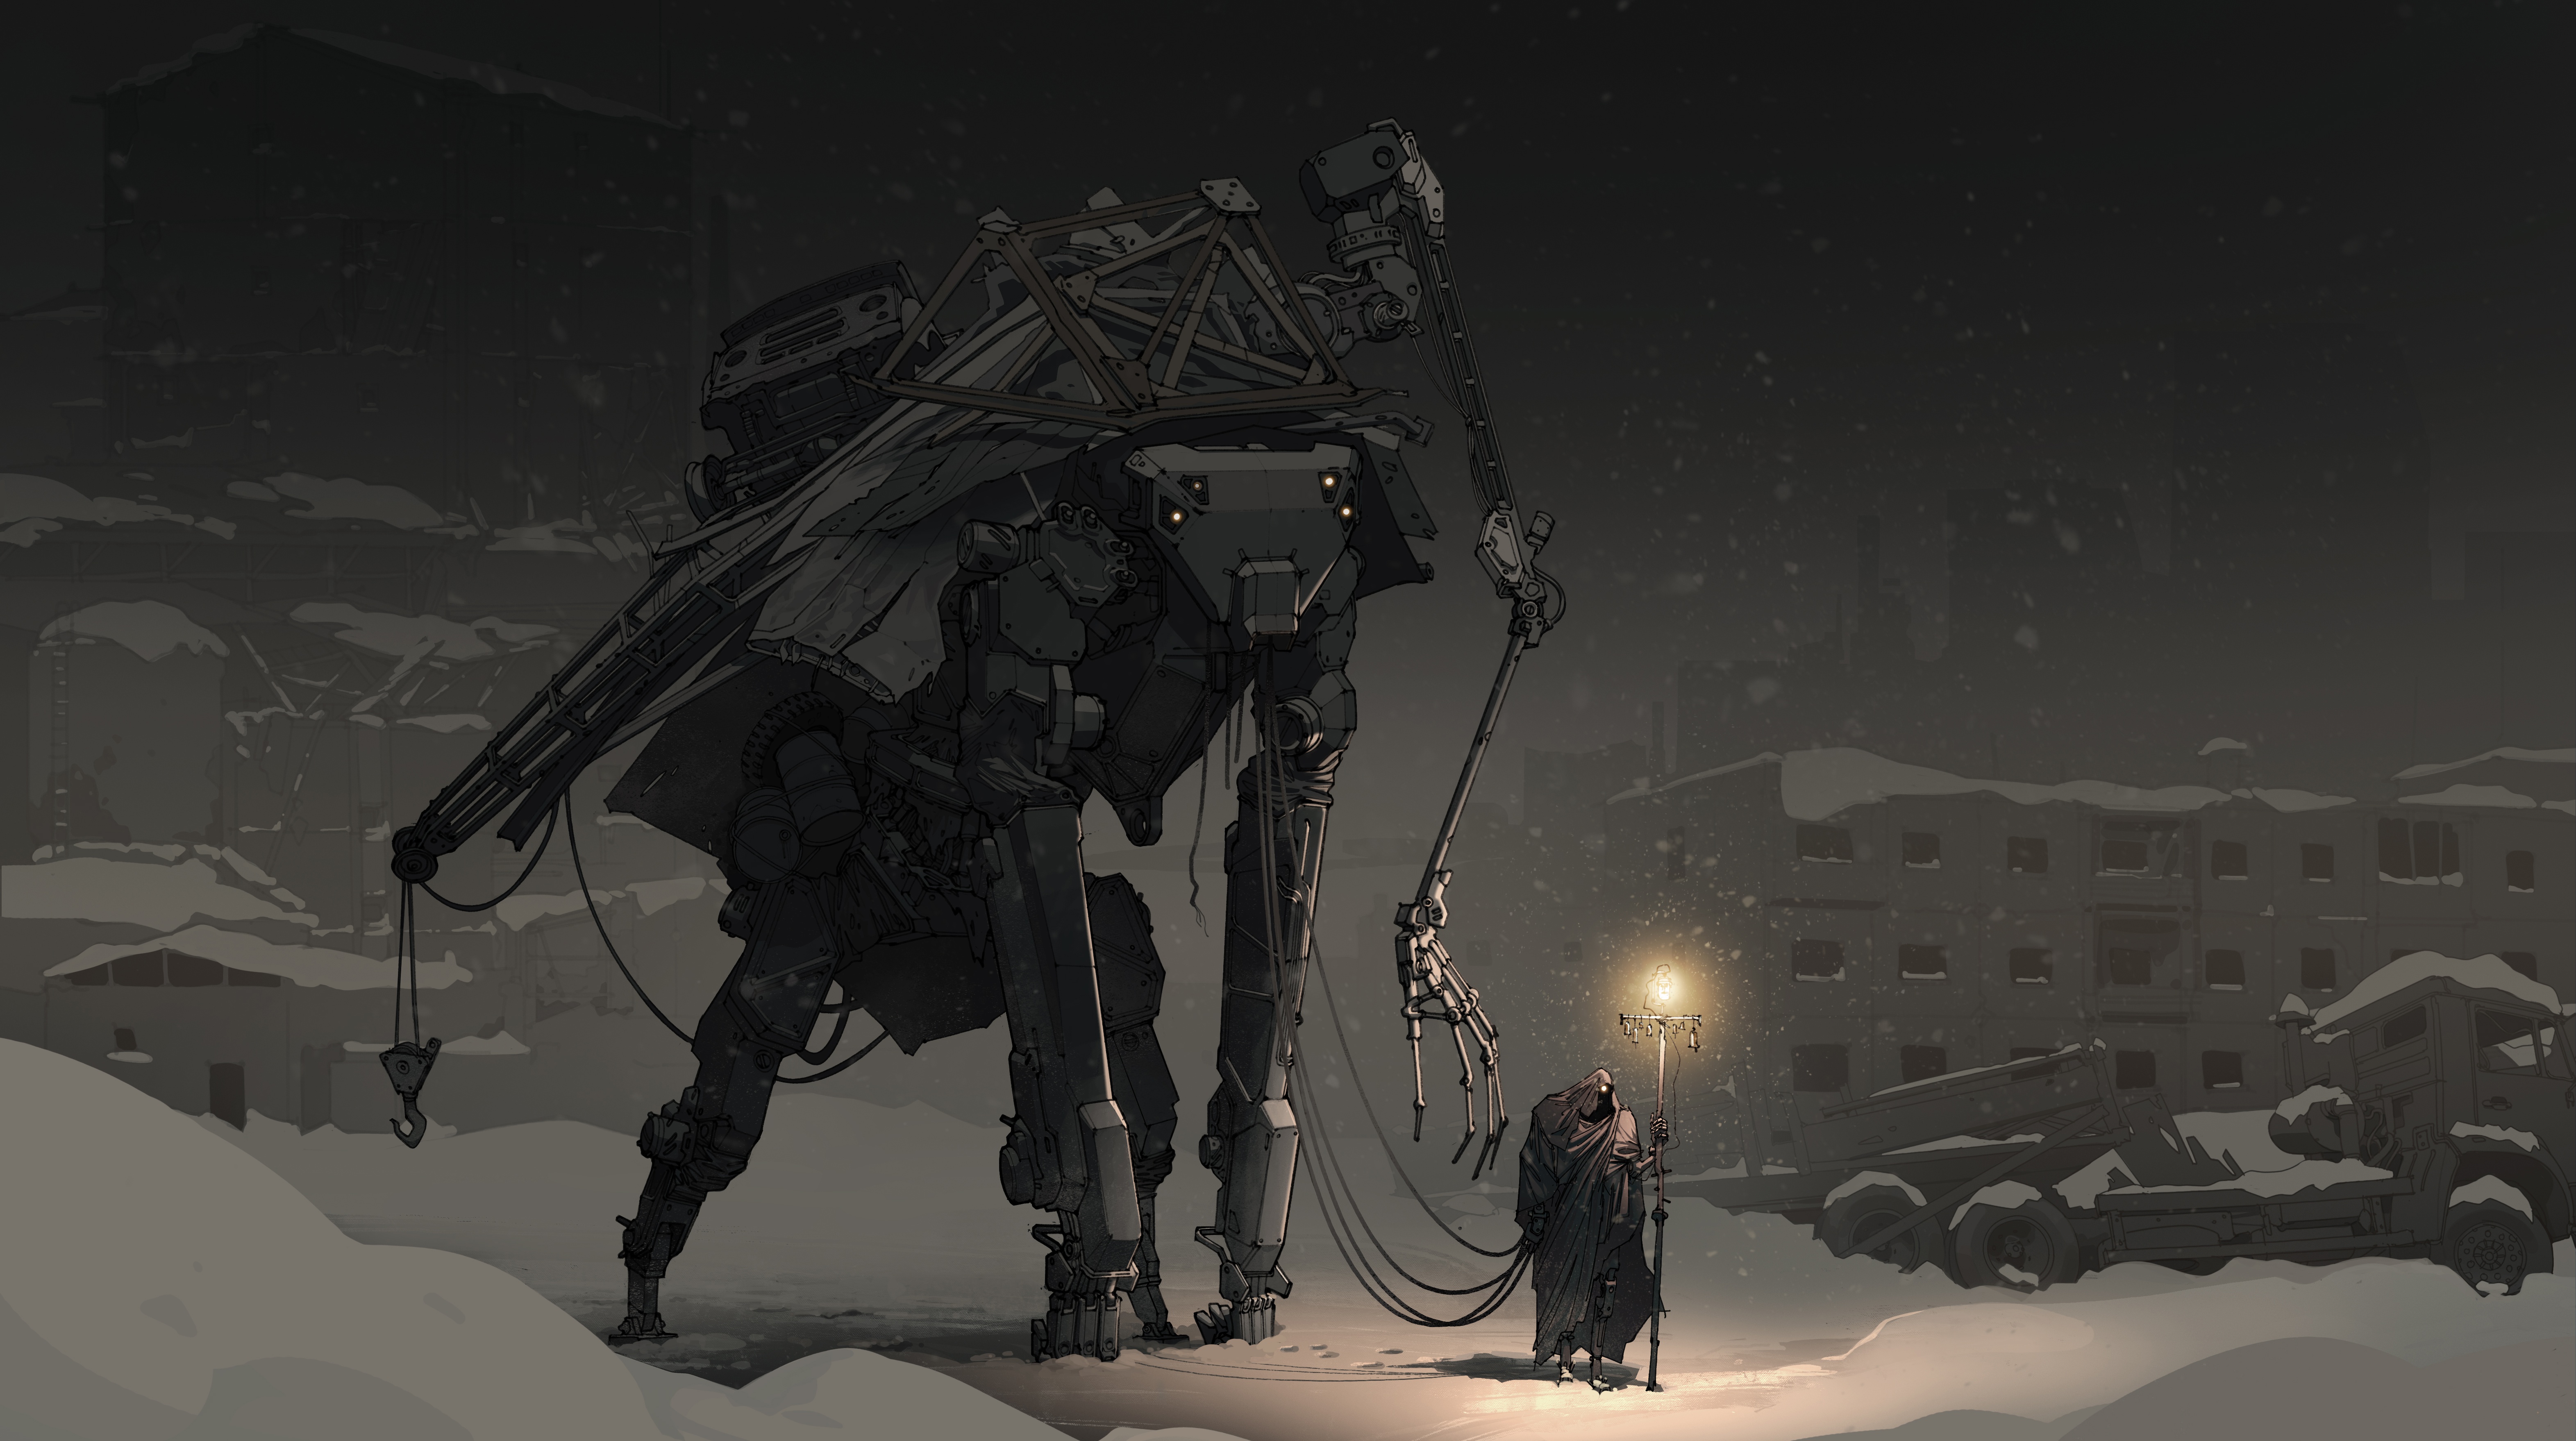 Robot Creepy Night Russia City House Mist Faded Dark Snow Winter Traveller 6286x3517